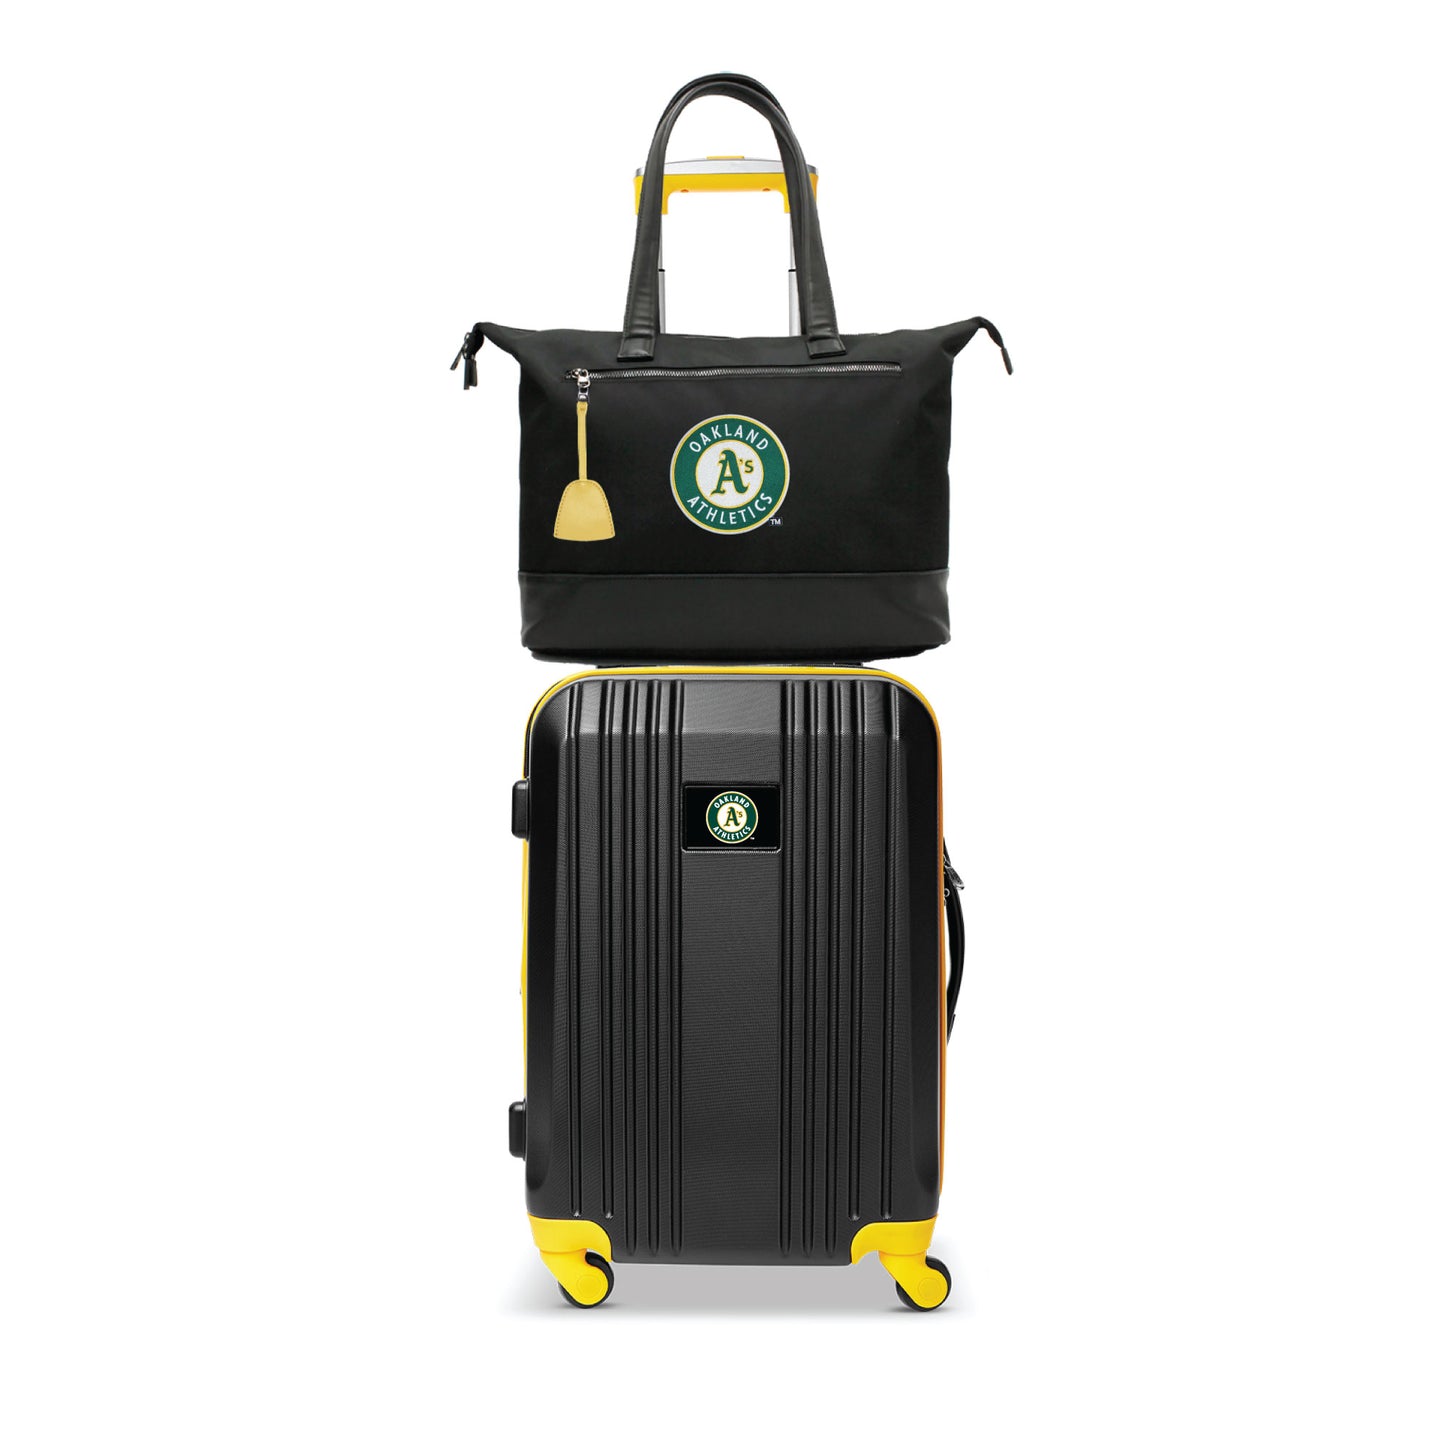 Oakland Athletics Premium Laptop Tote Bag and Luggage Set